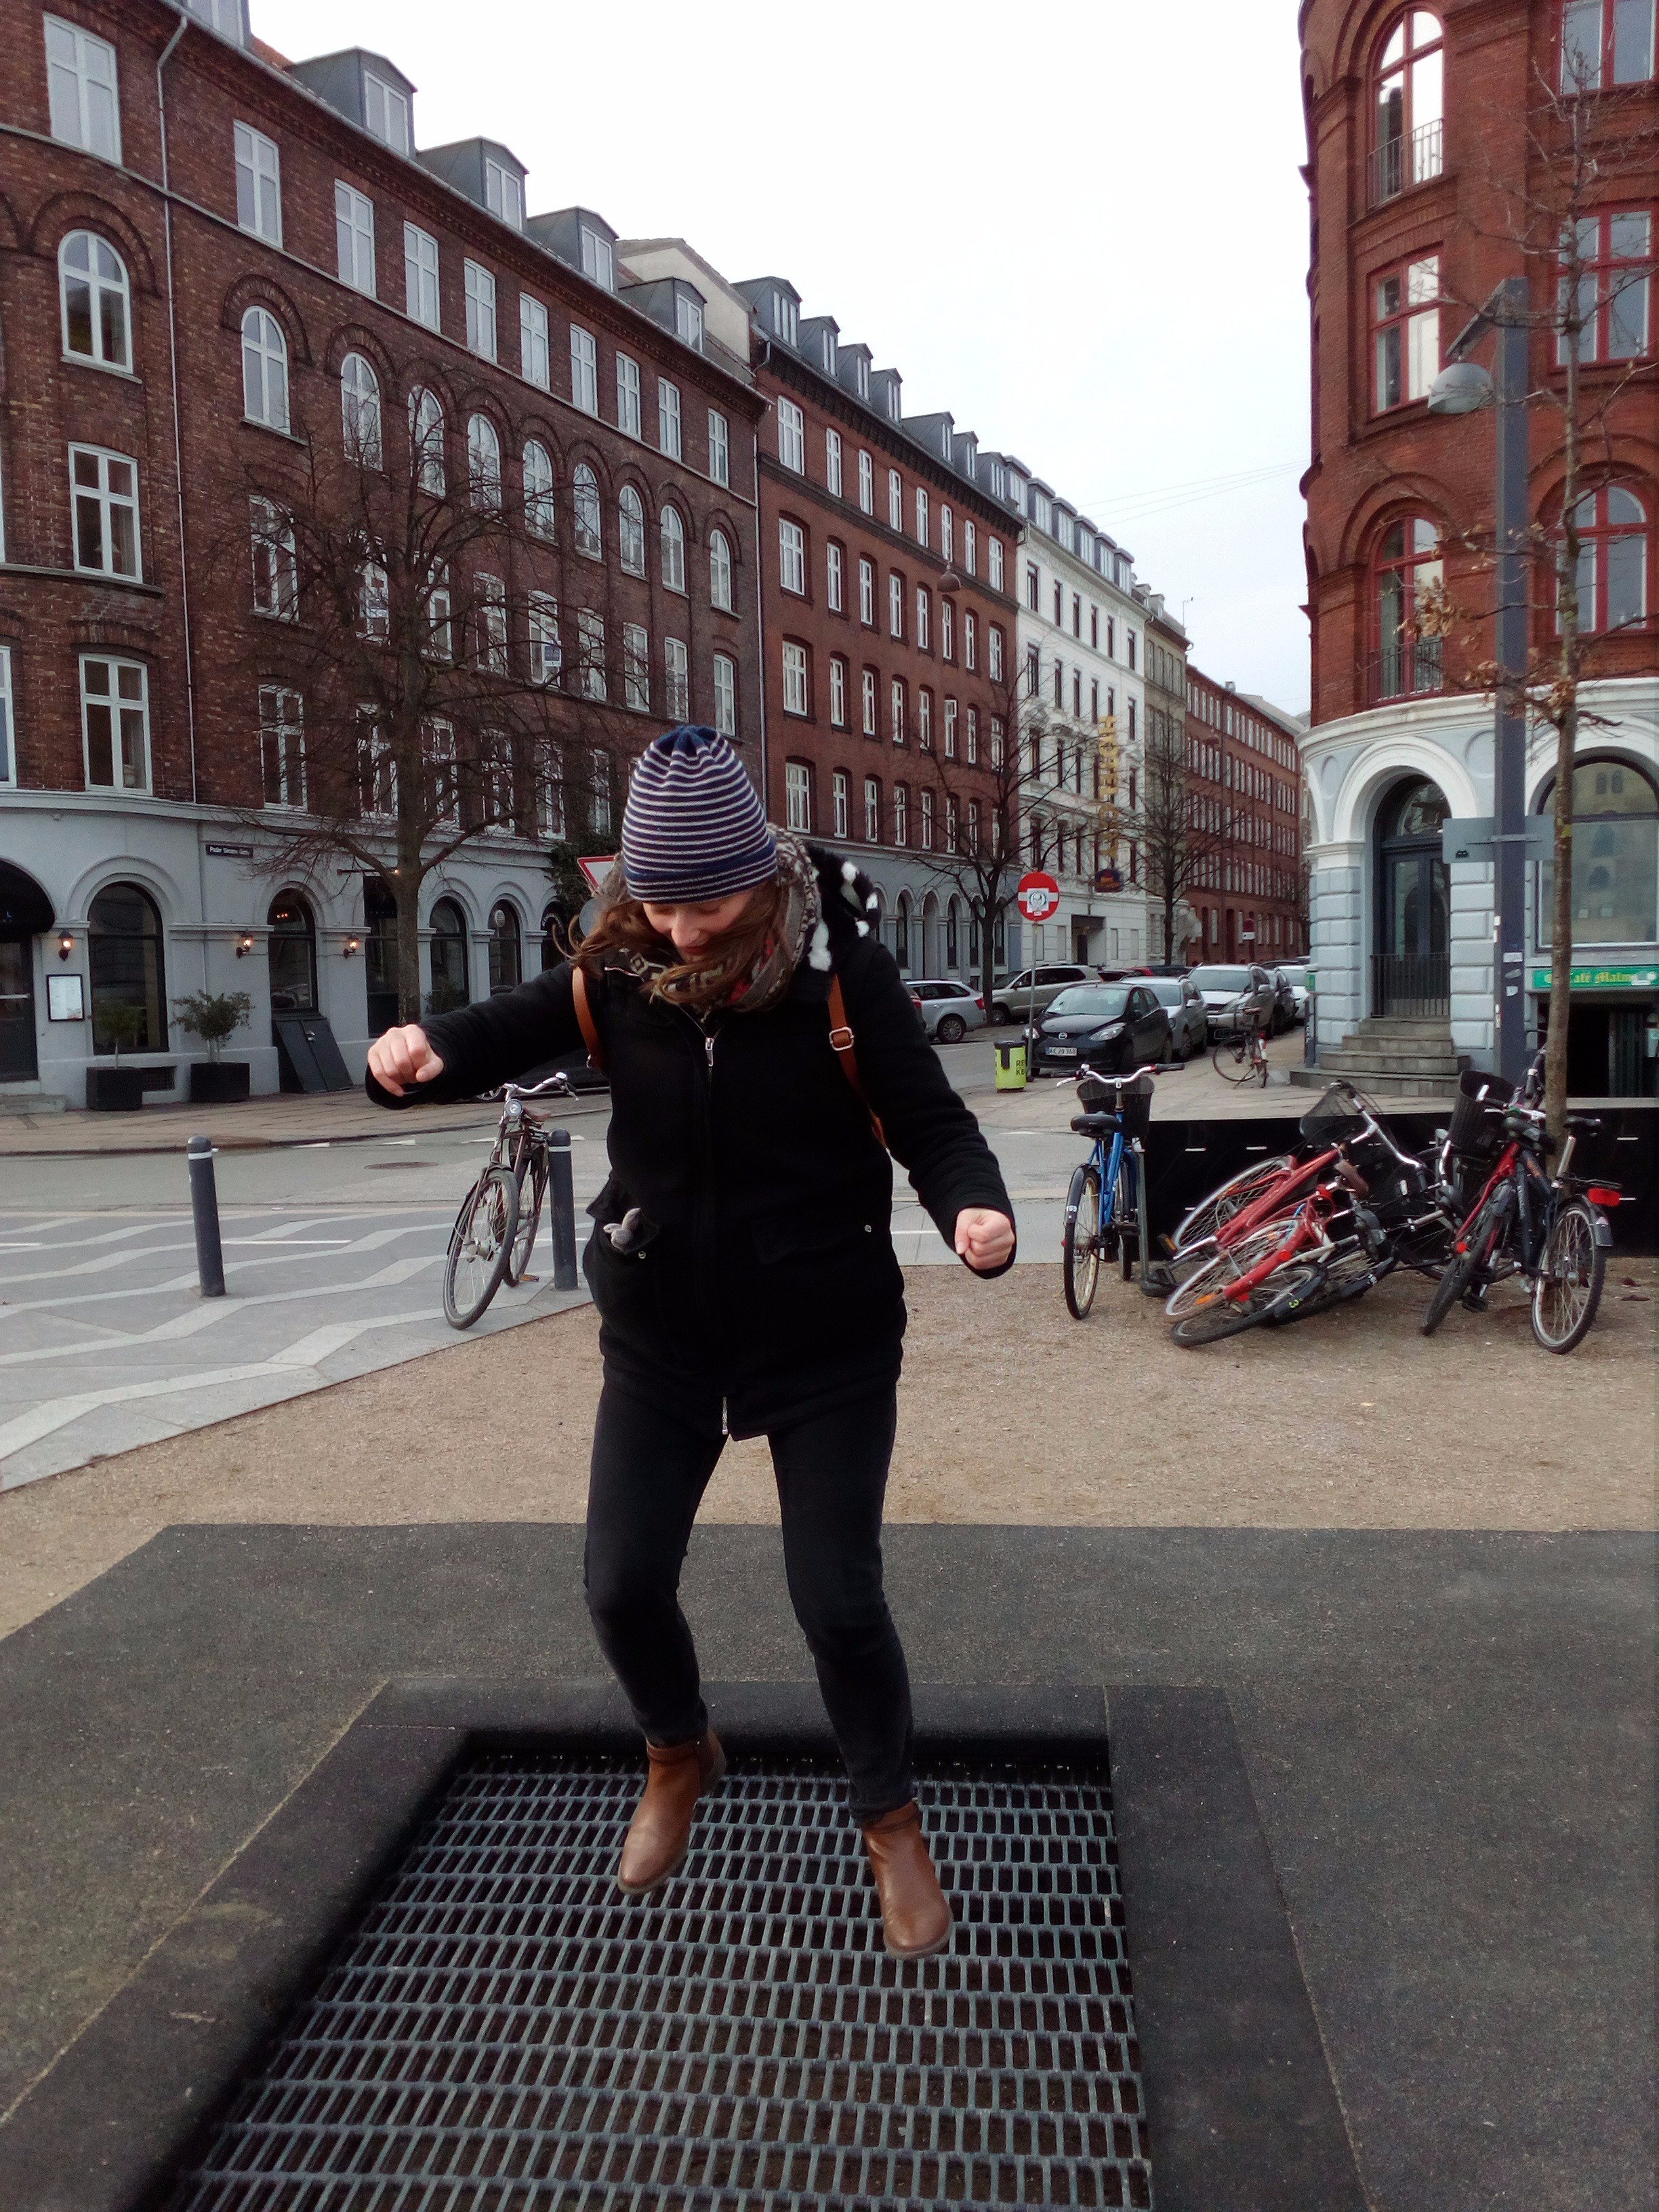 MacCabeDurneyBarnes on "Our consultants testing trampolines in Danish urban spaces #Copenhagen #lifebetweenbuildings #urbandesign #fieldtrip https://t.co/4s8akWk3DS" / Twitter